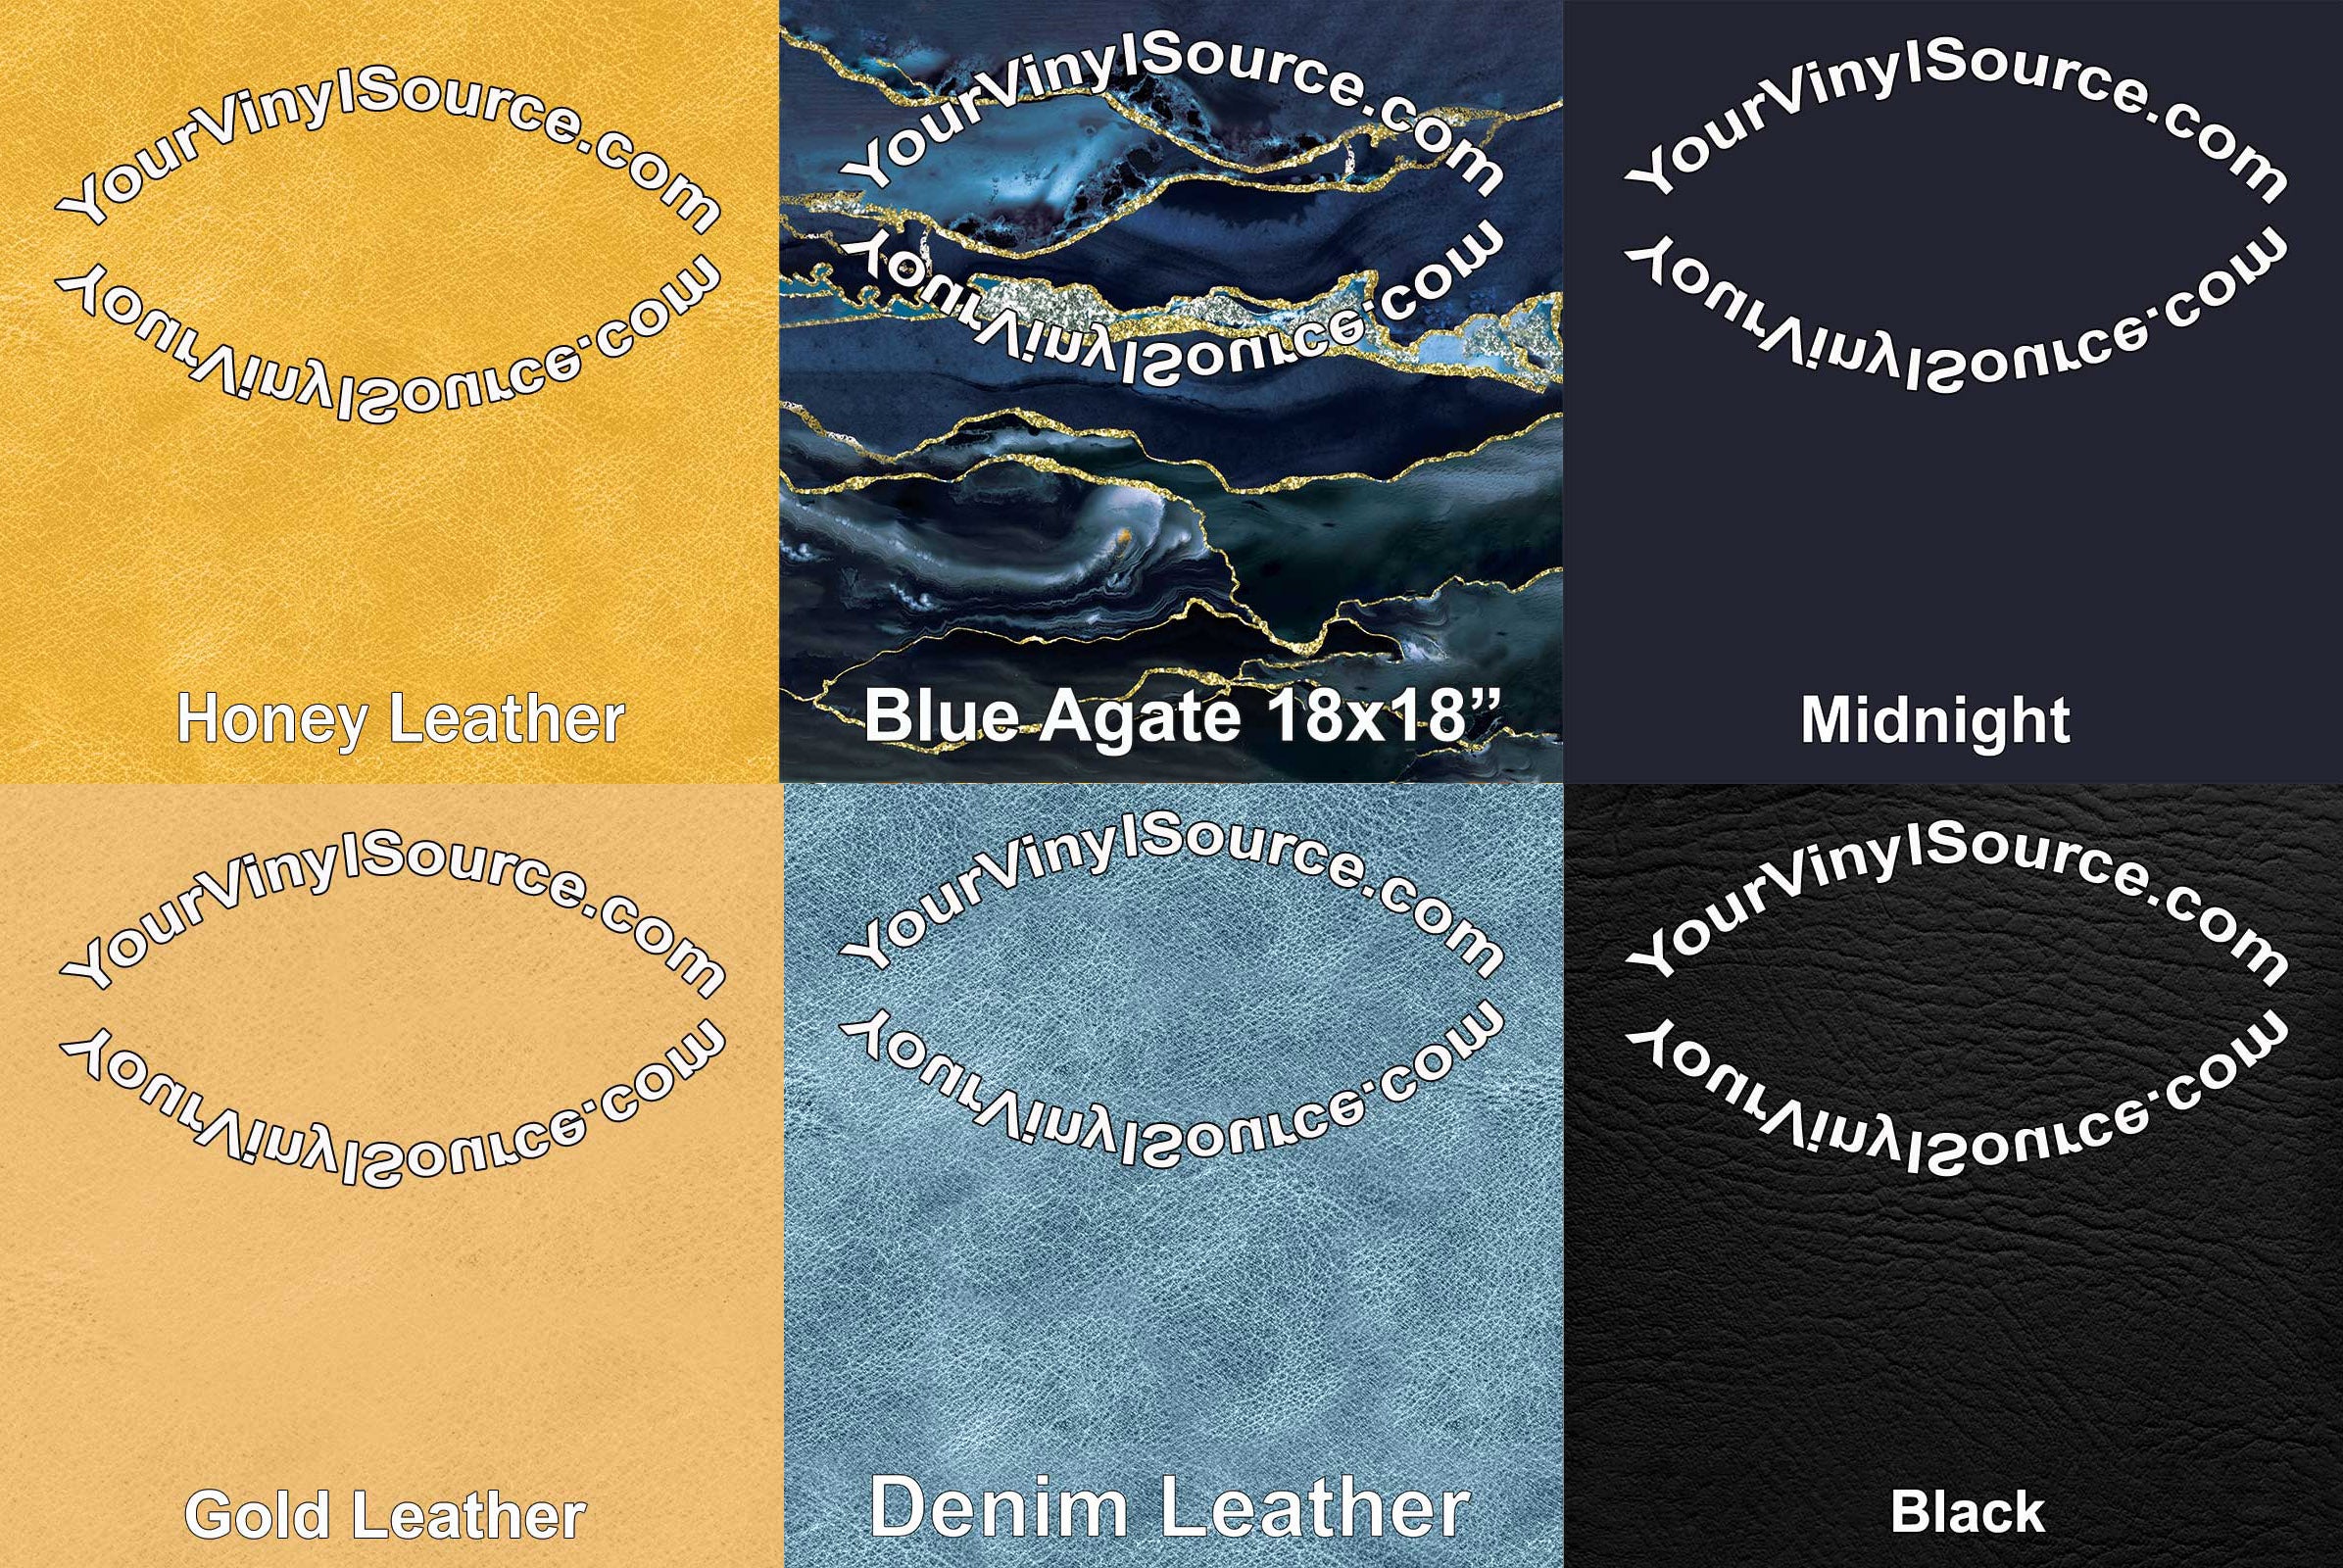 Blue Agate Panel 18x18